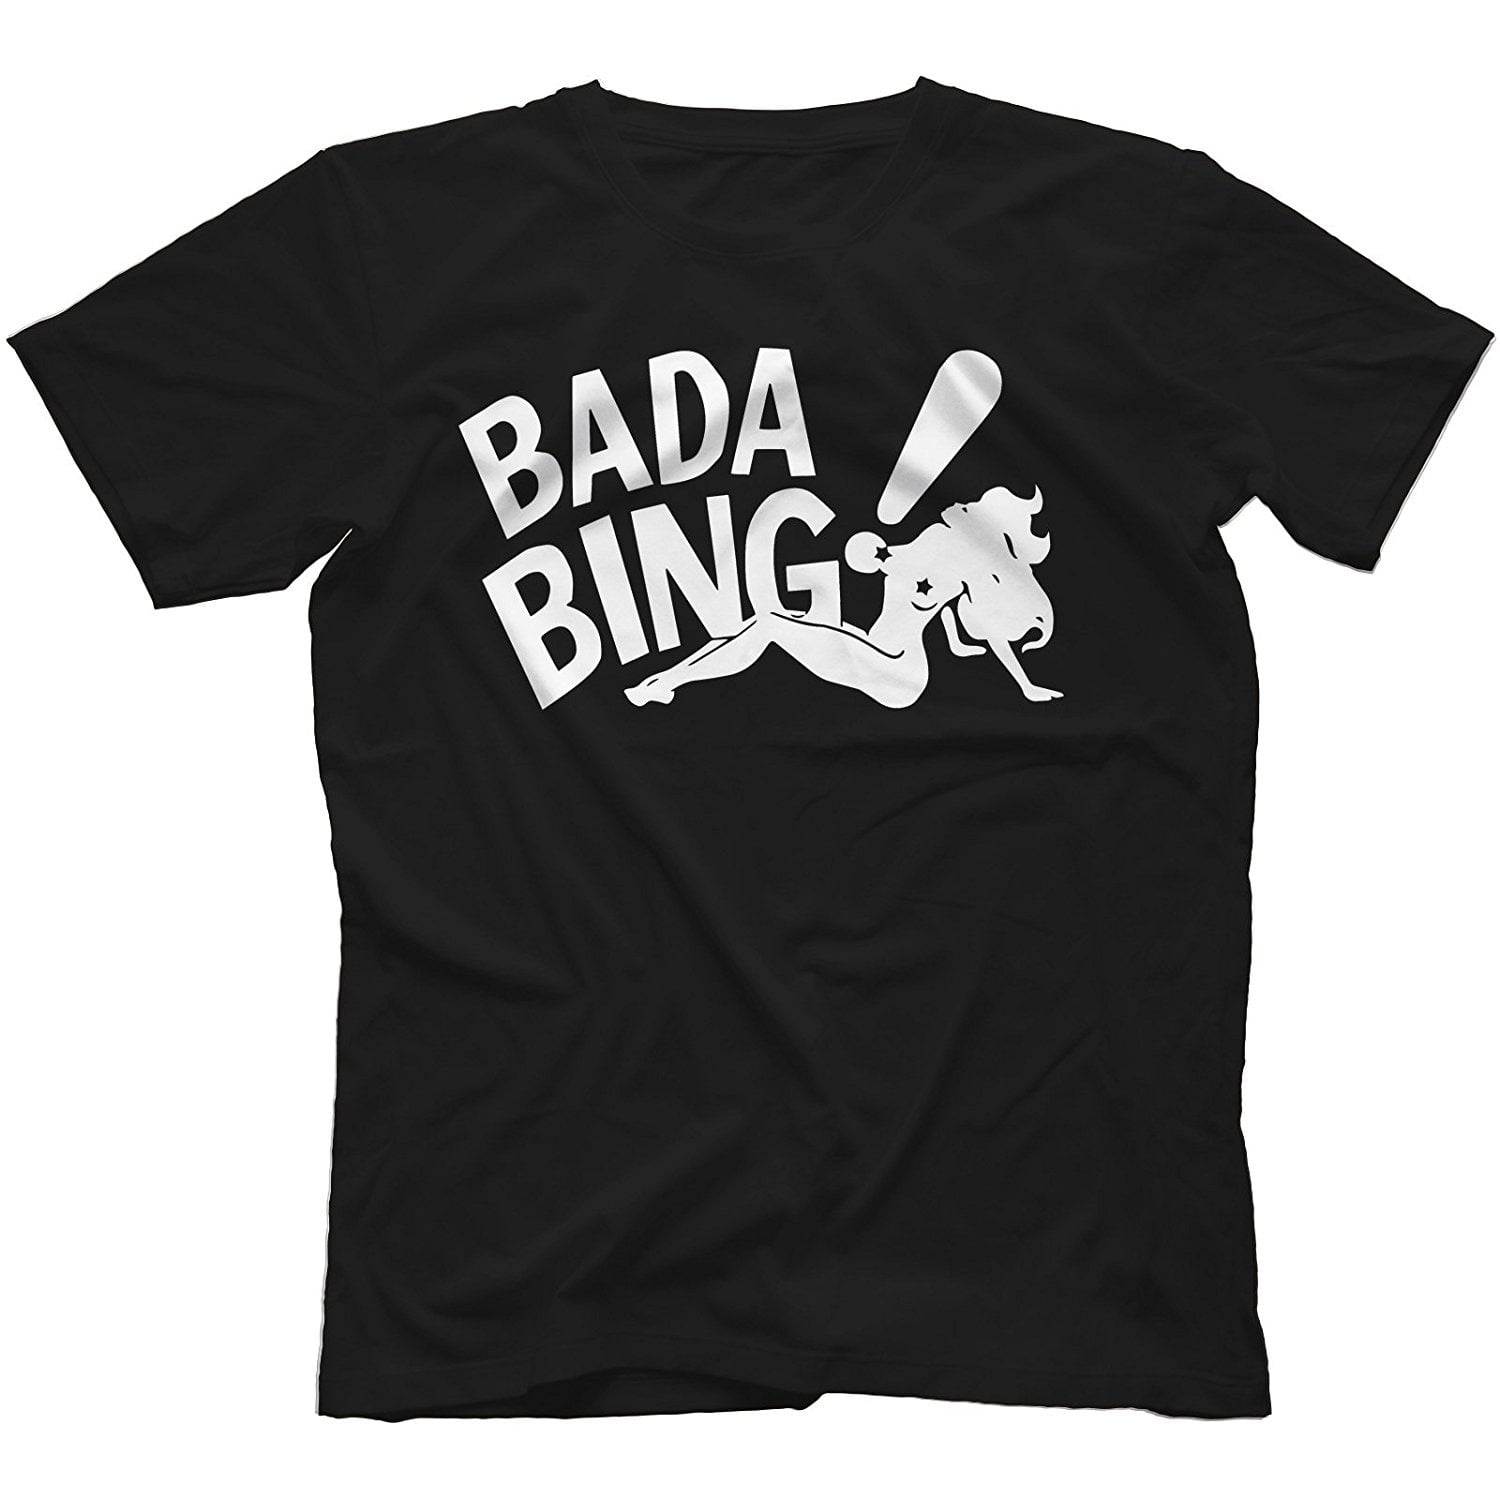 Bada Bing Strip Club Sopranos Inspired Men's Fashion T-shirt - Walmart.com